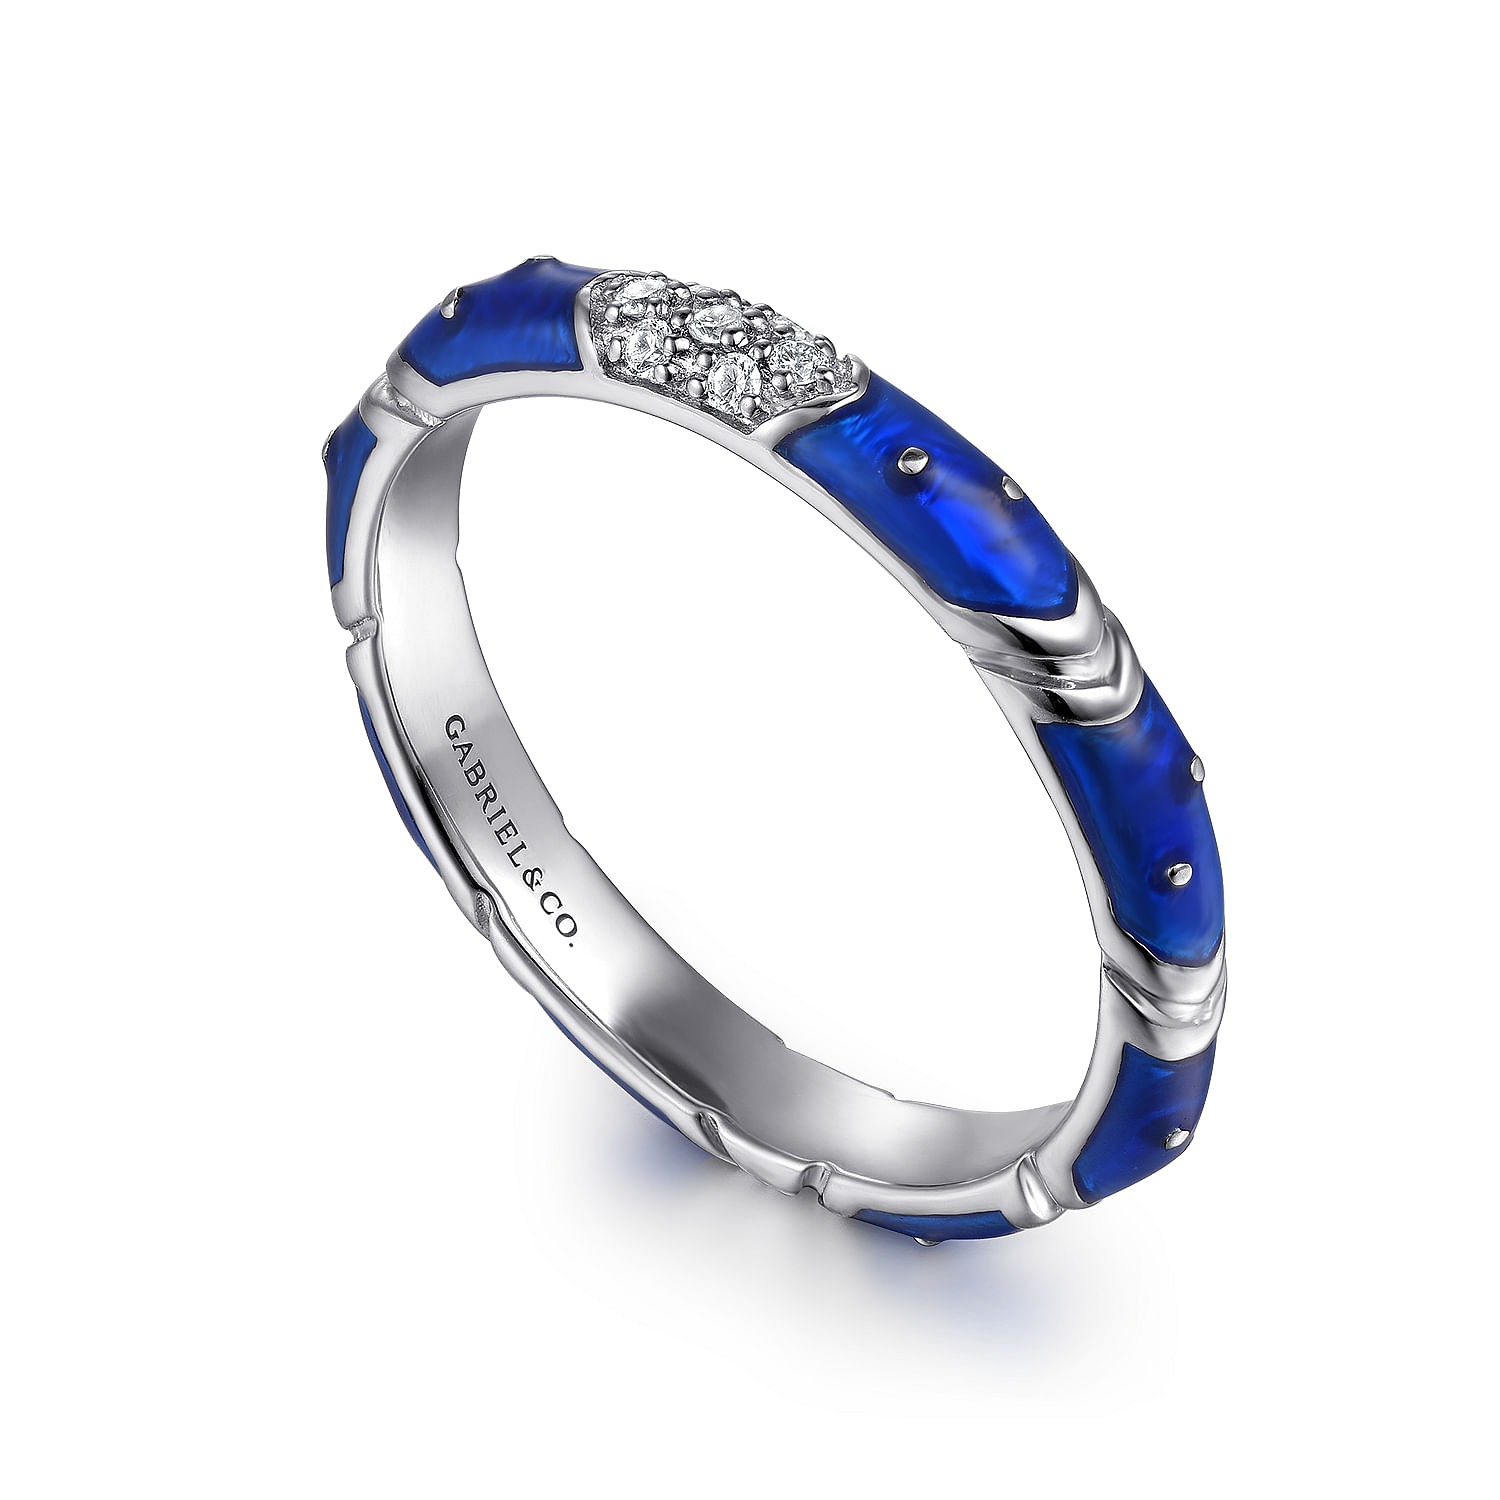 Enamel - 925 Sterling Silver Blue Enameled Ring with Diamonds - Shot 3